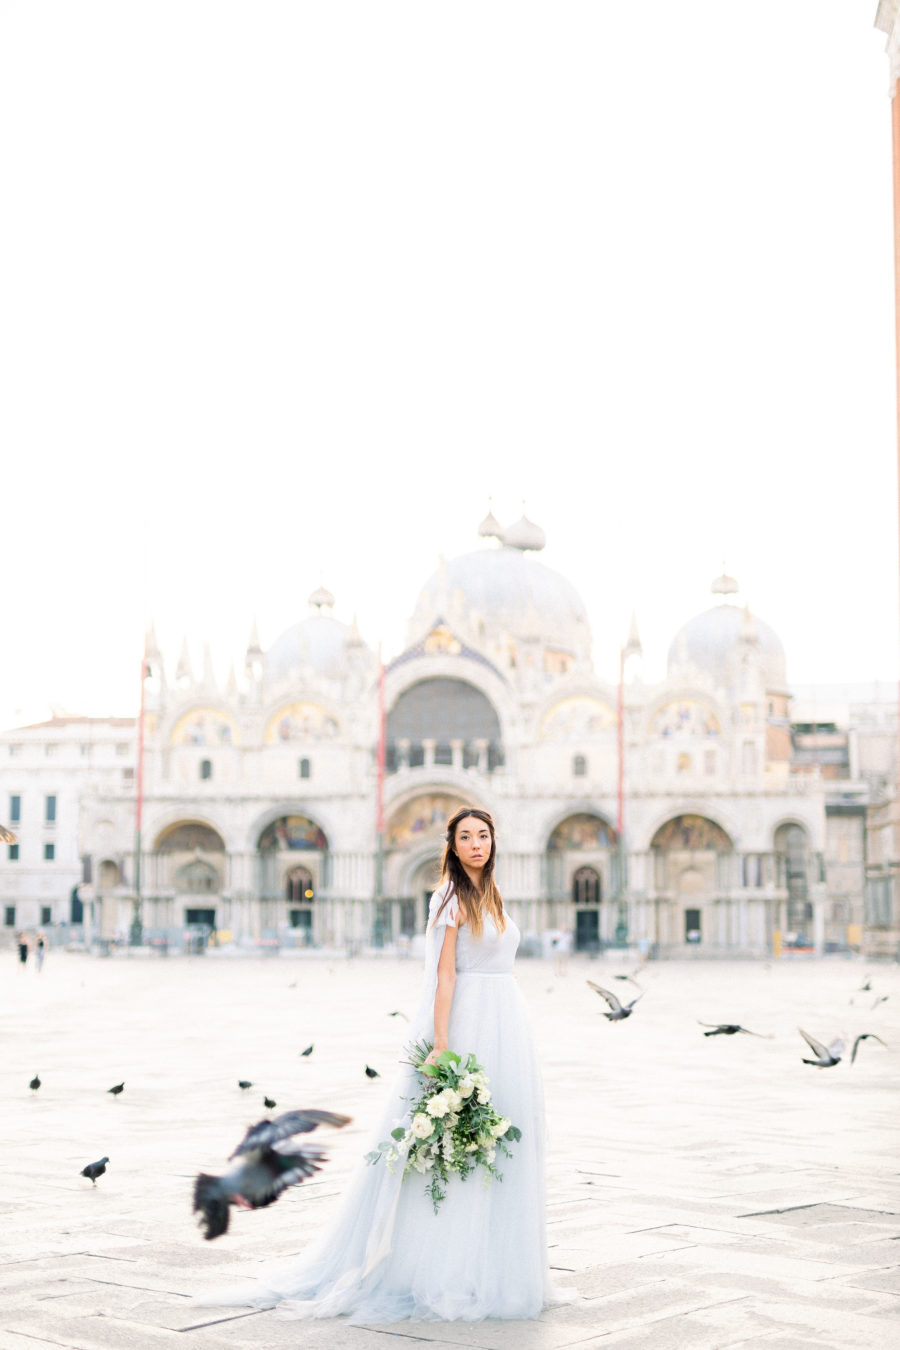 What a beautiful shot in Piazza San Marco